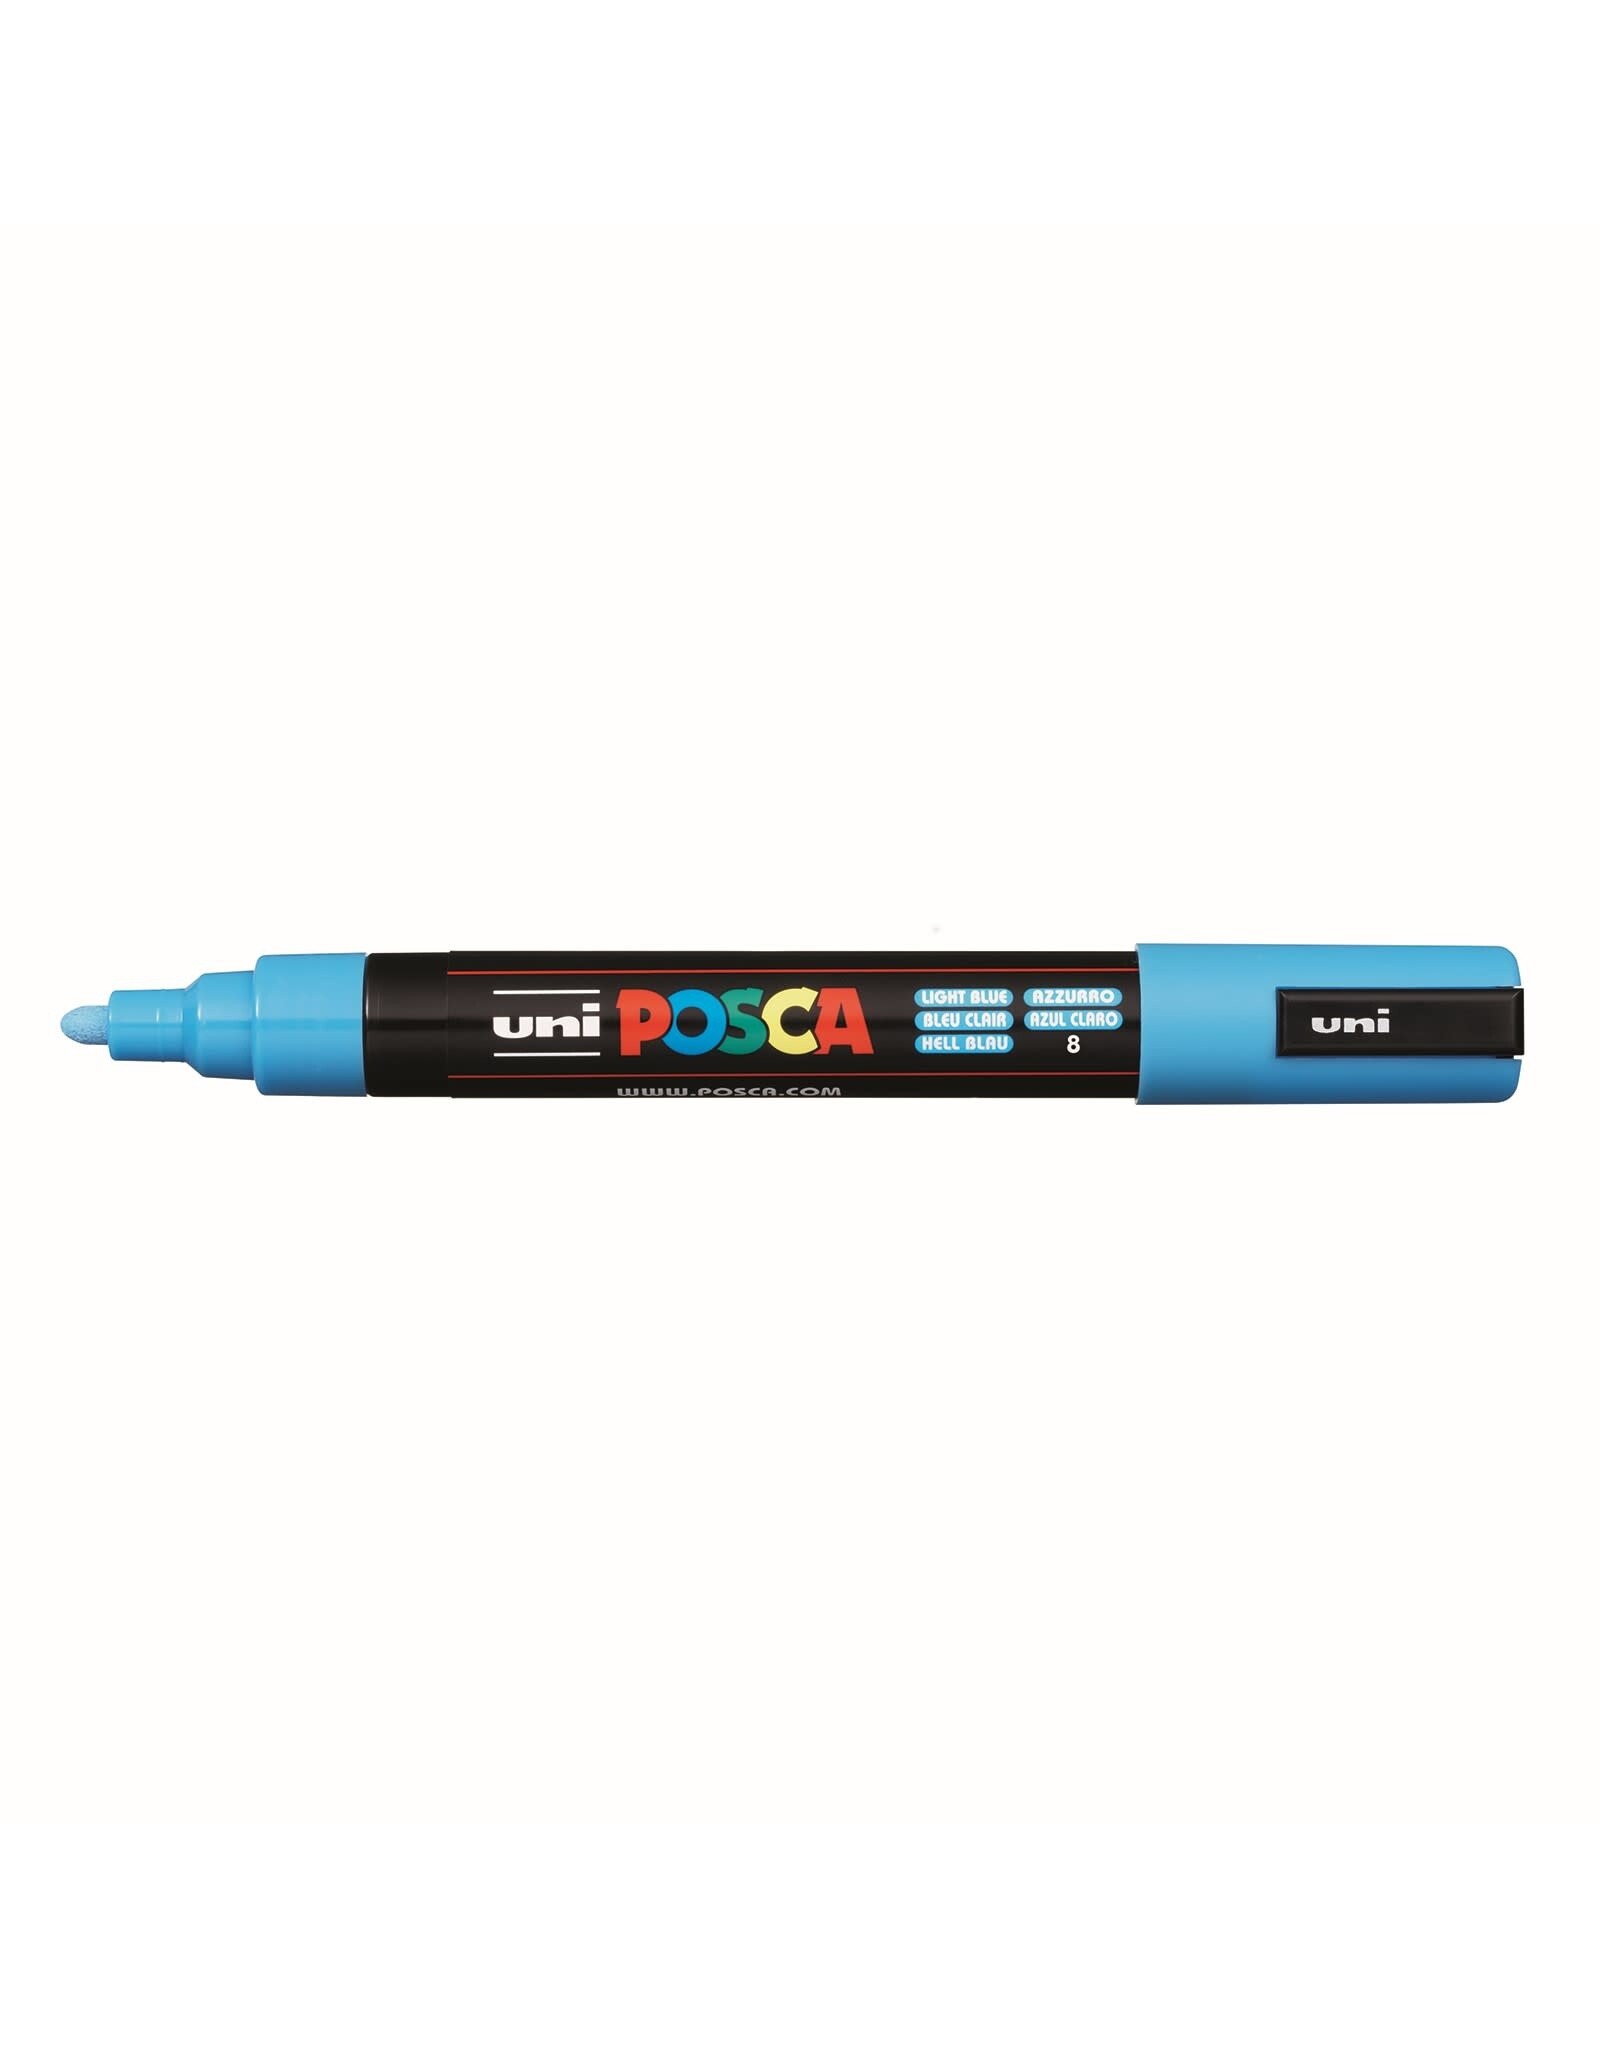 POSCA Uni POSCA Paint Marker, Medium, Light Blue